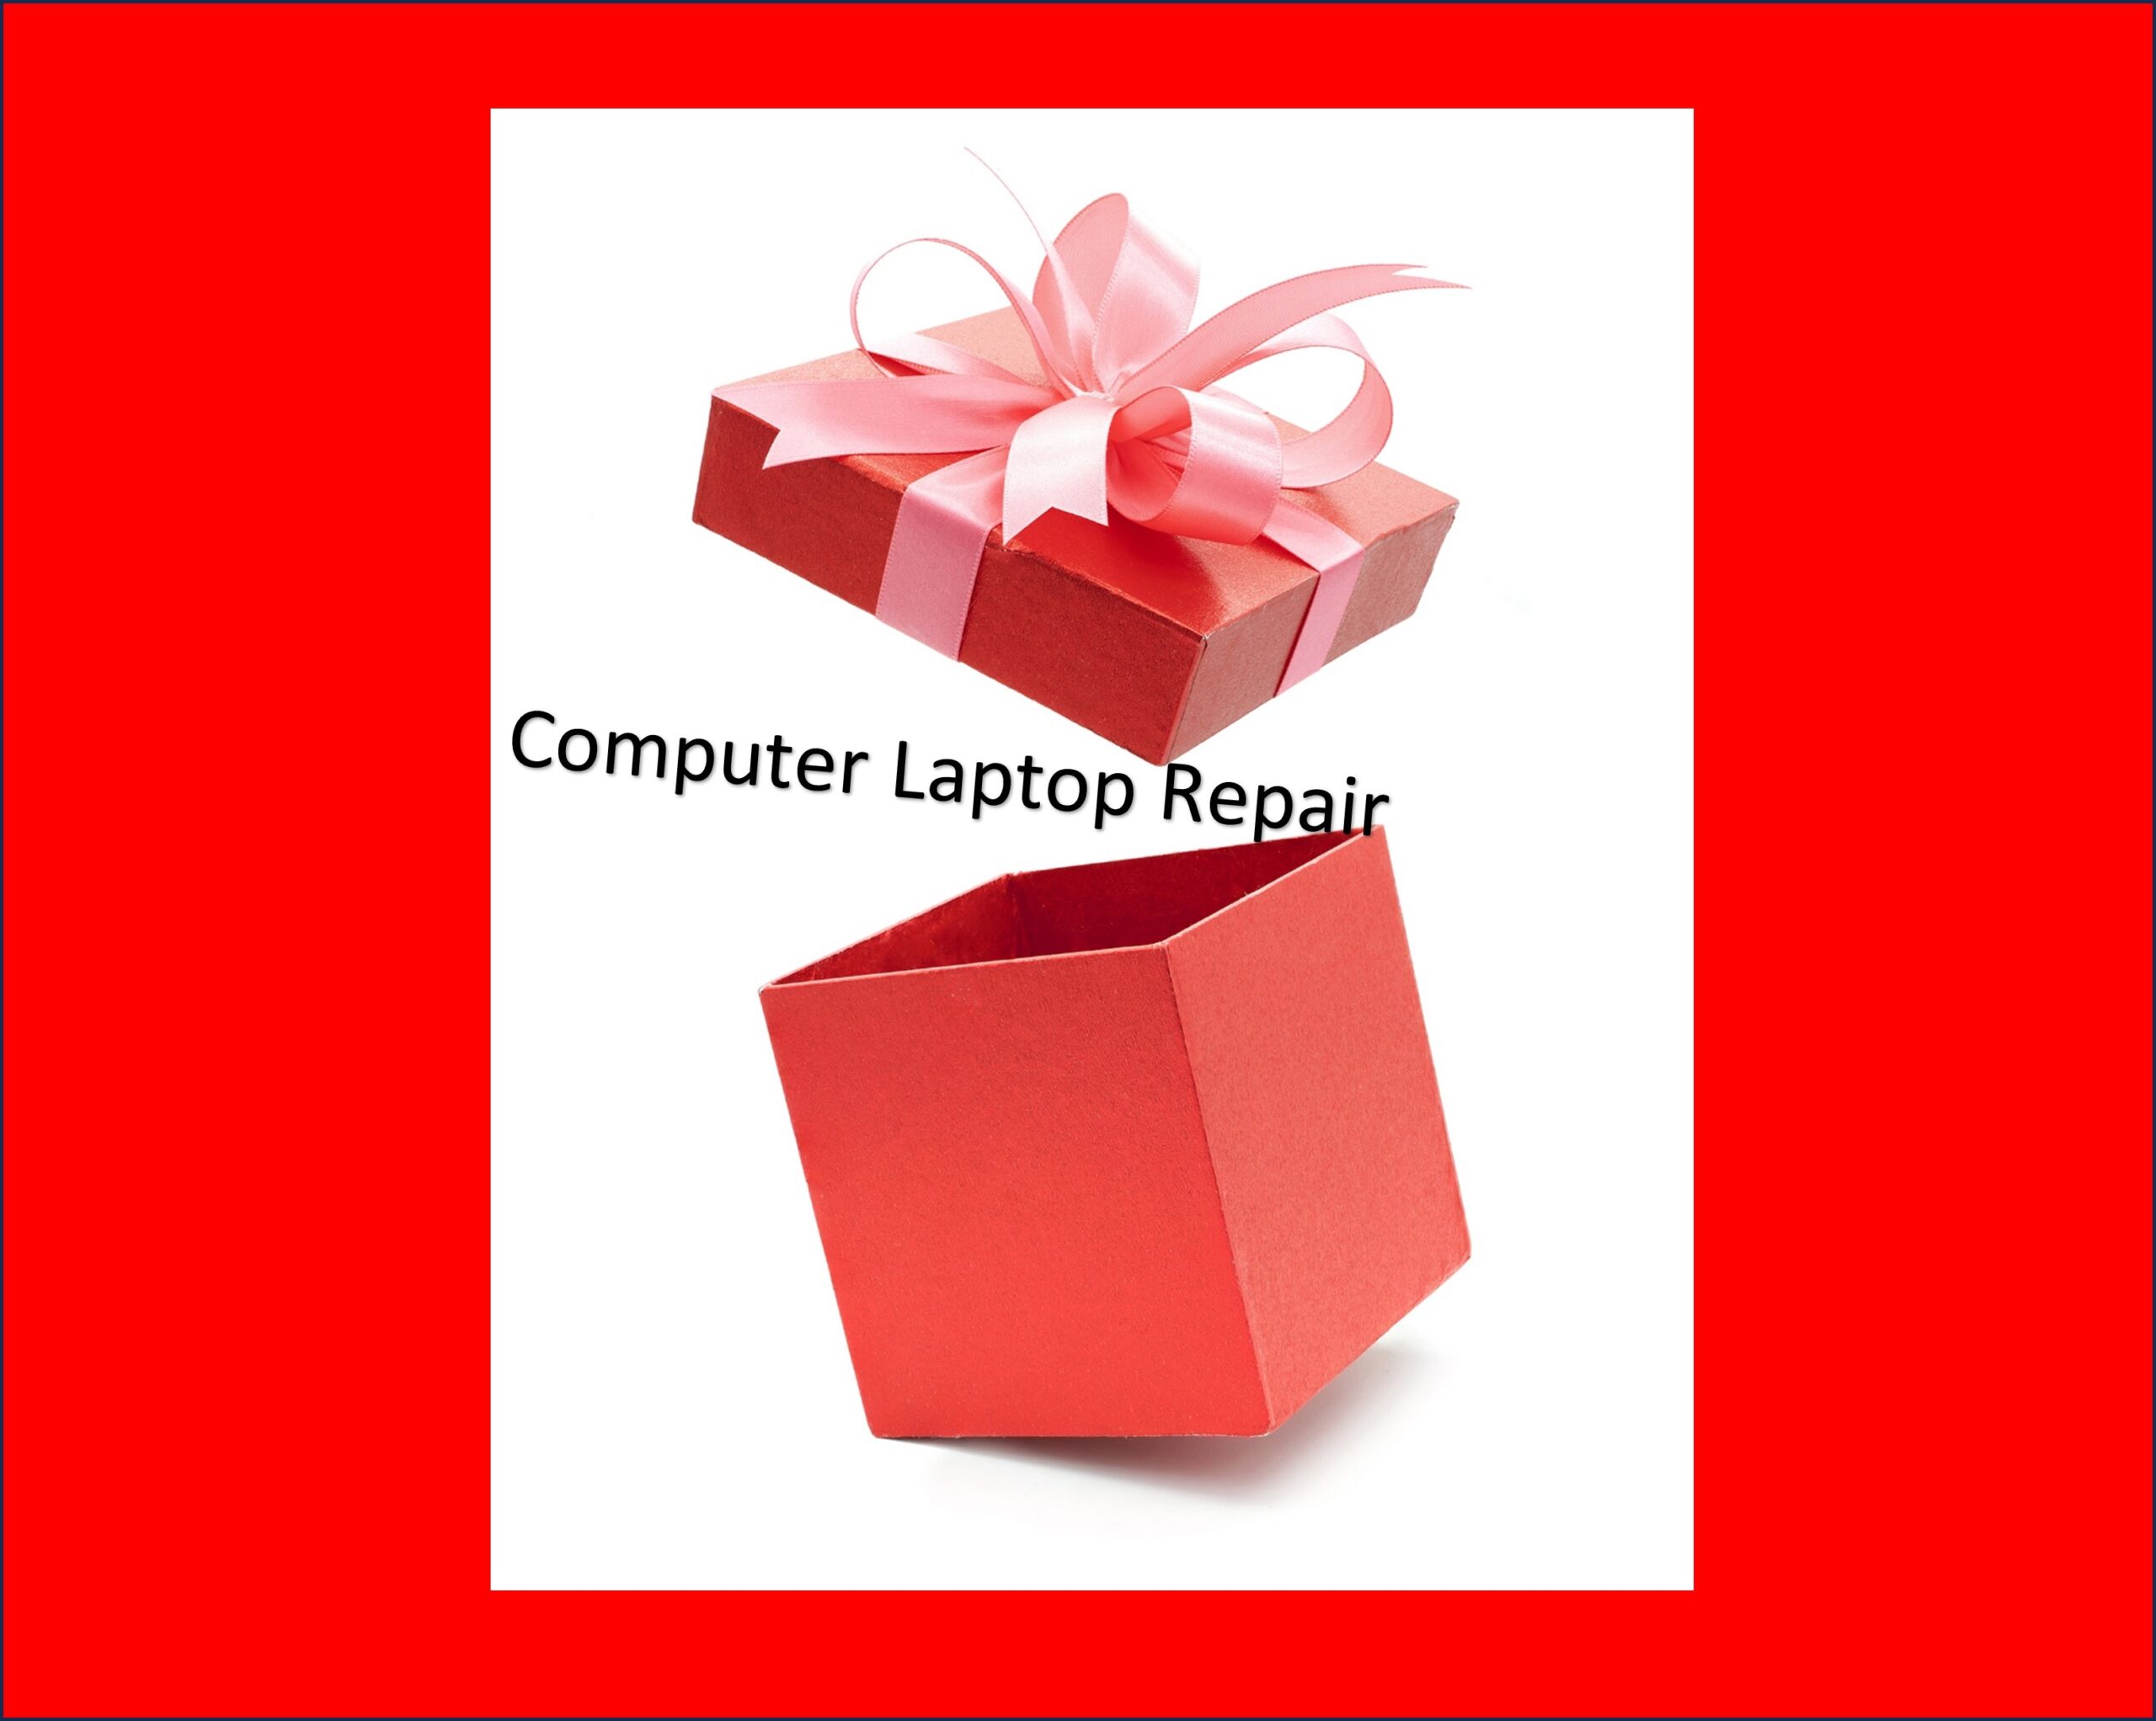 Computer Laptop Repair for Christmas